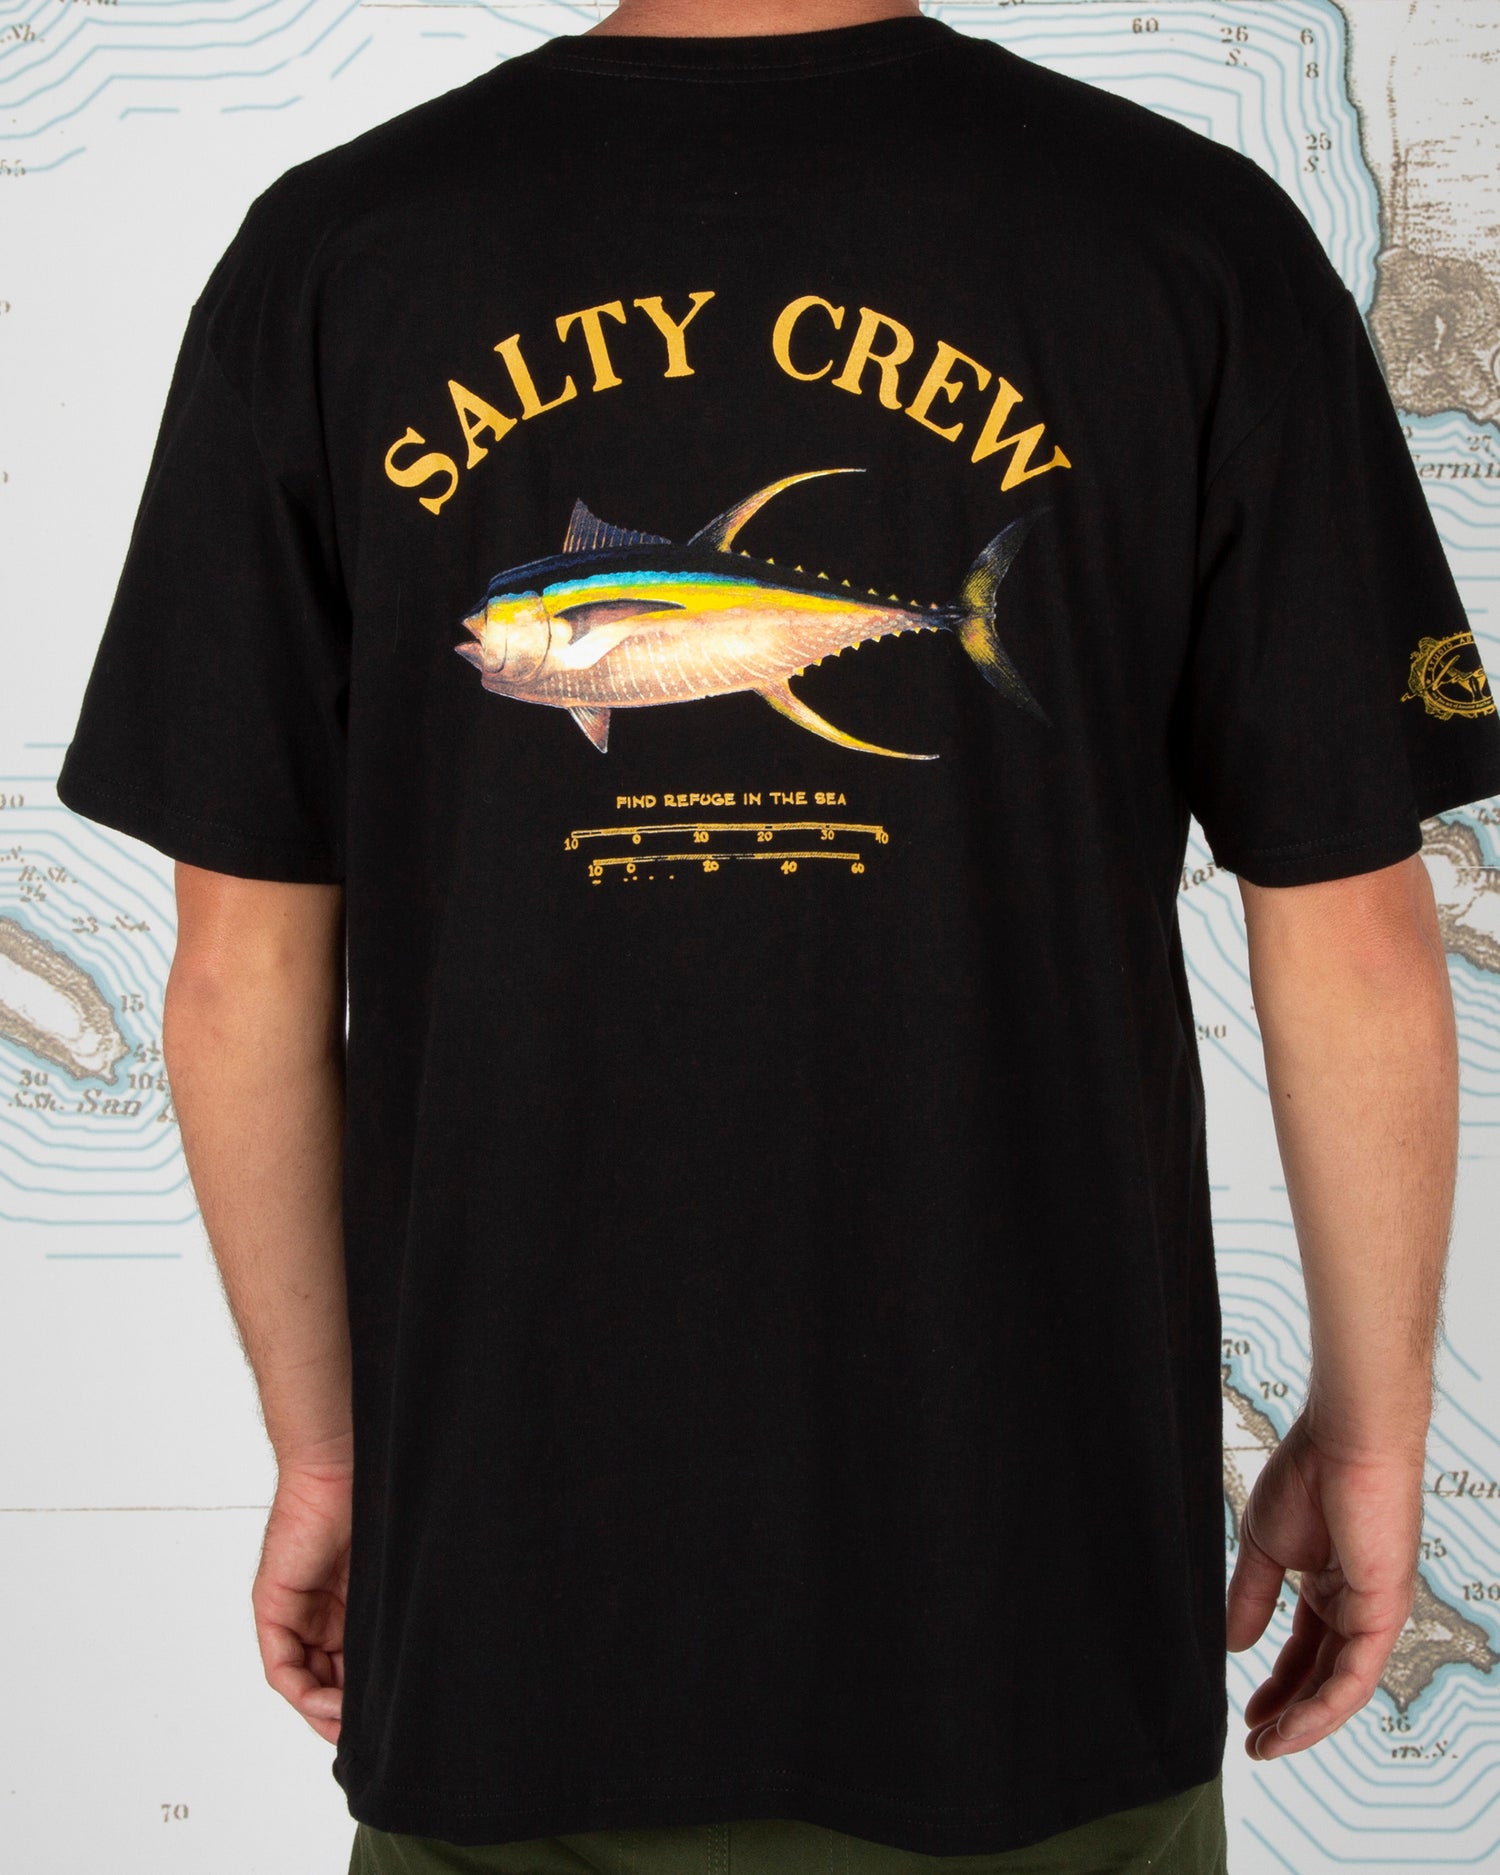 Salty Crew Shirts Hot Sale